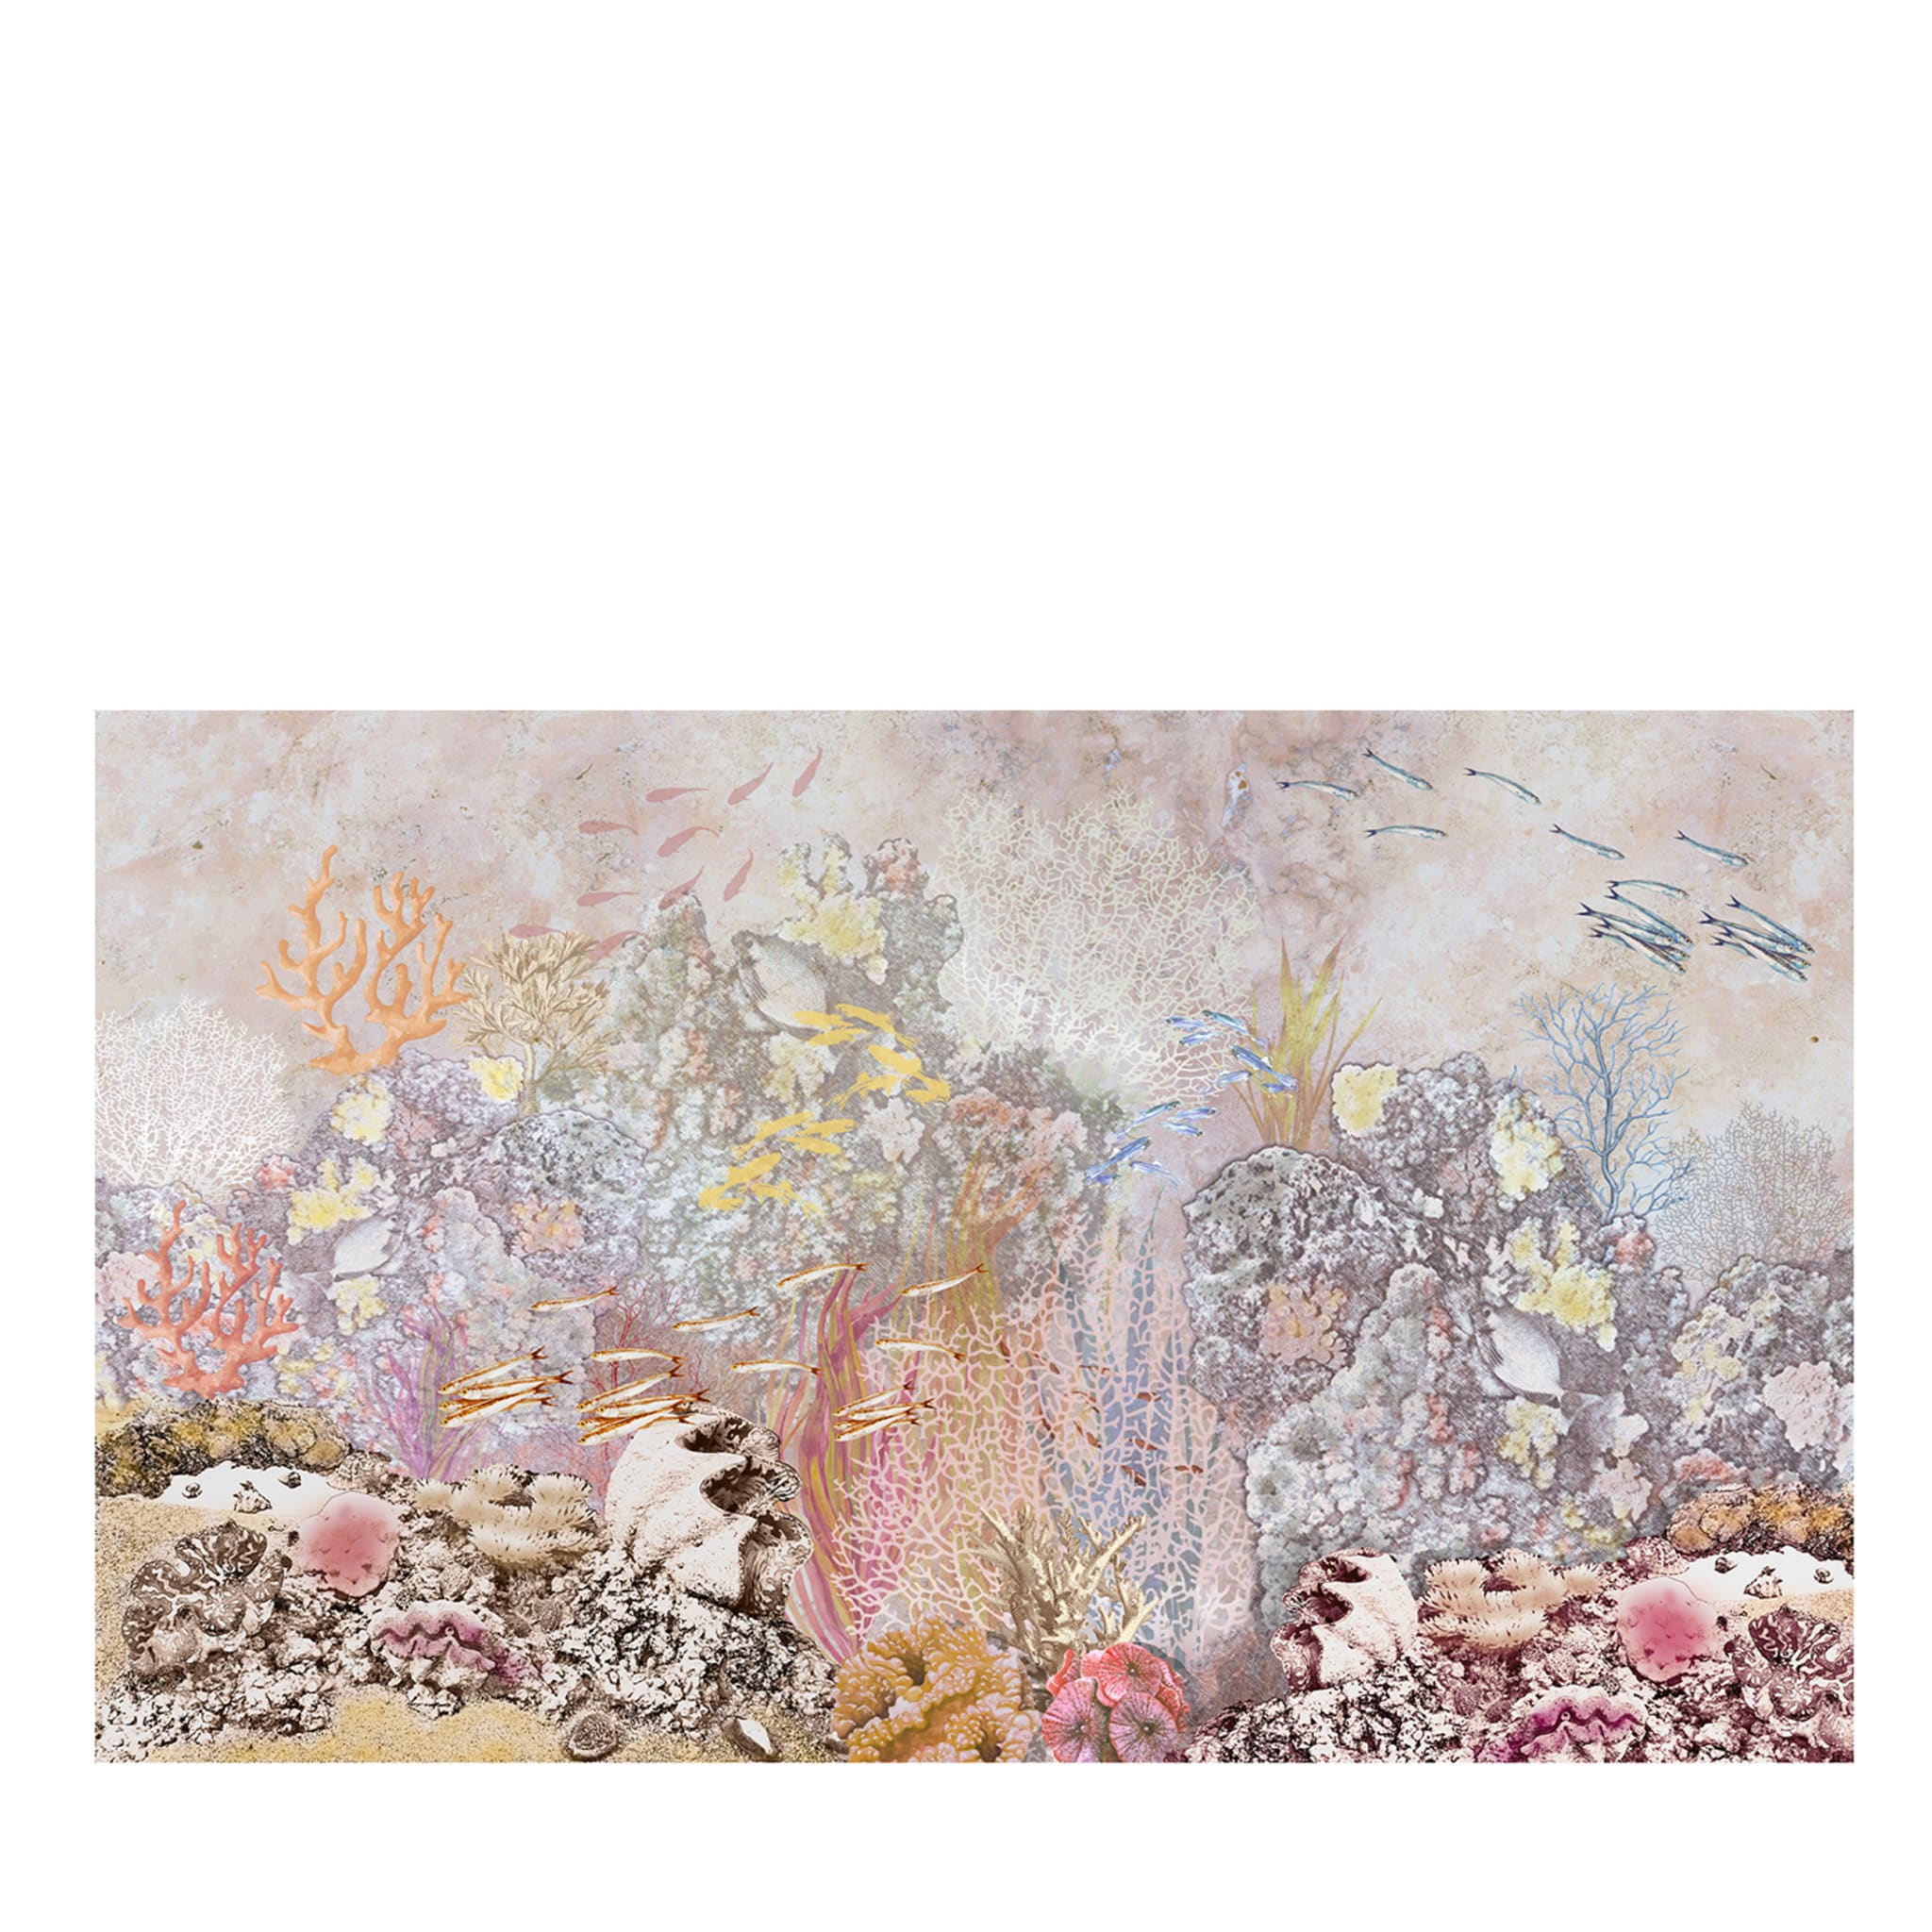 Behind Reef Color Wallpaper - Main view